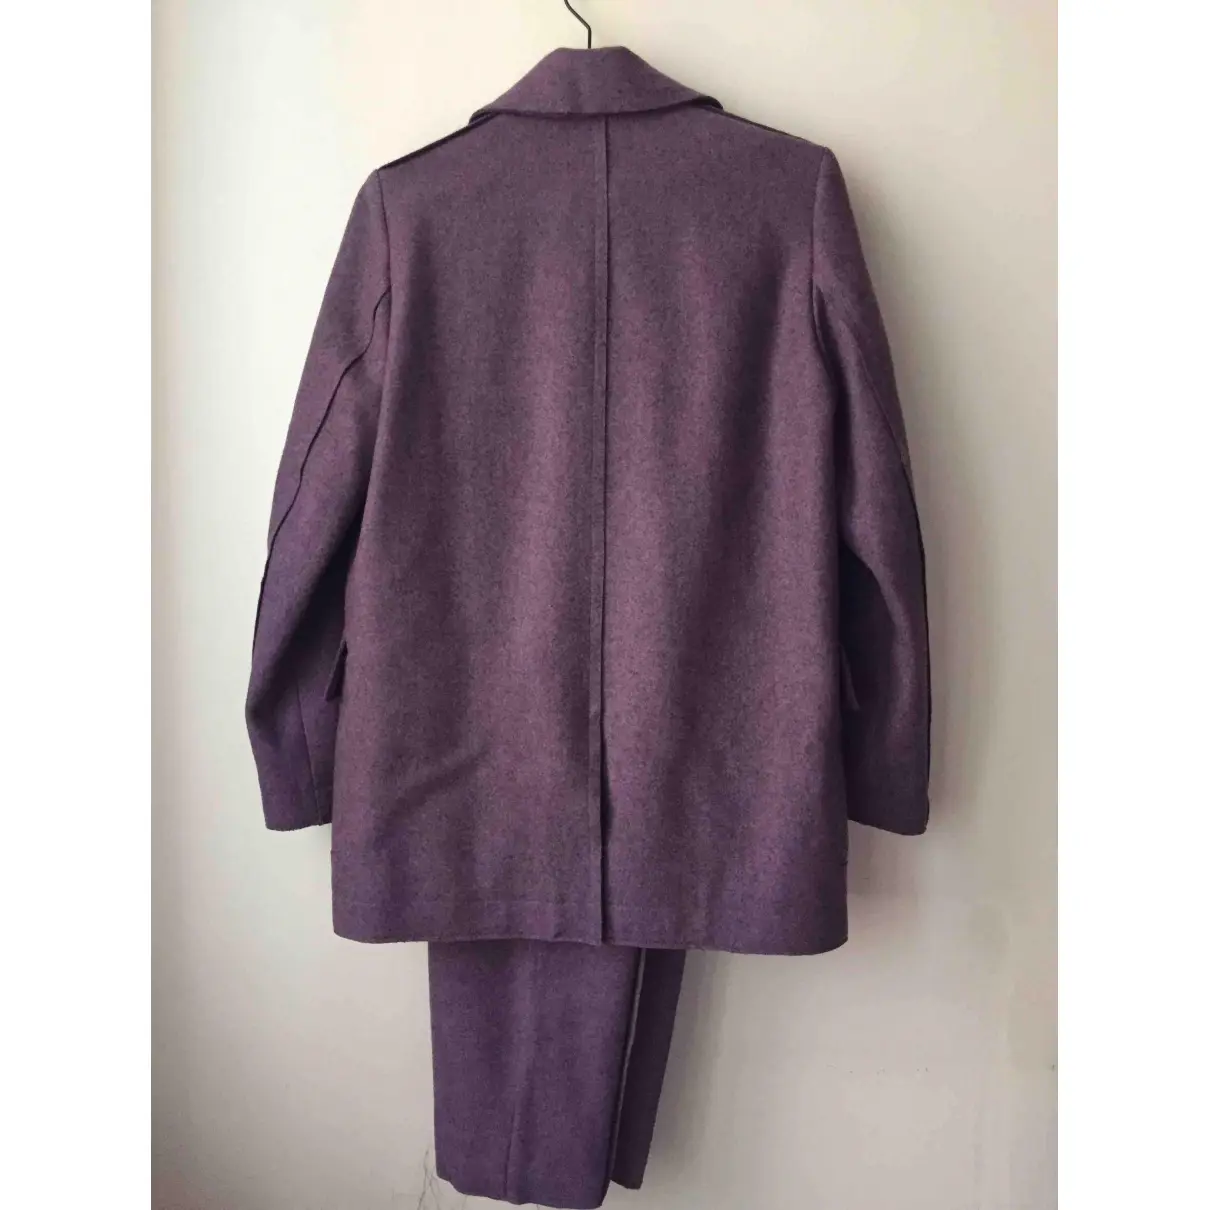 Buy Cos Wool suit jacket online